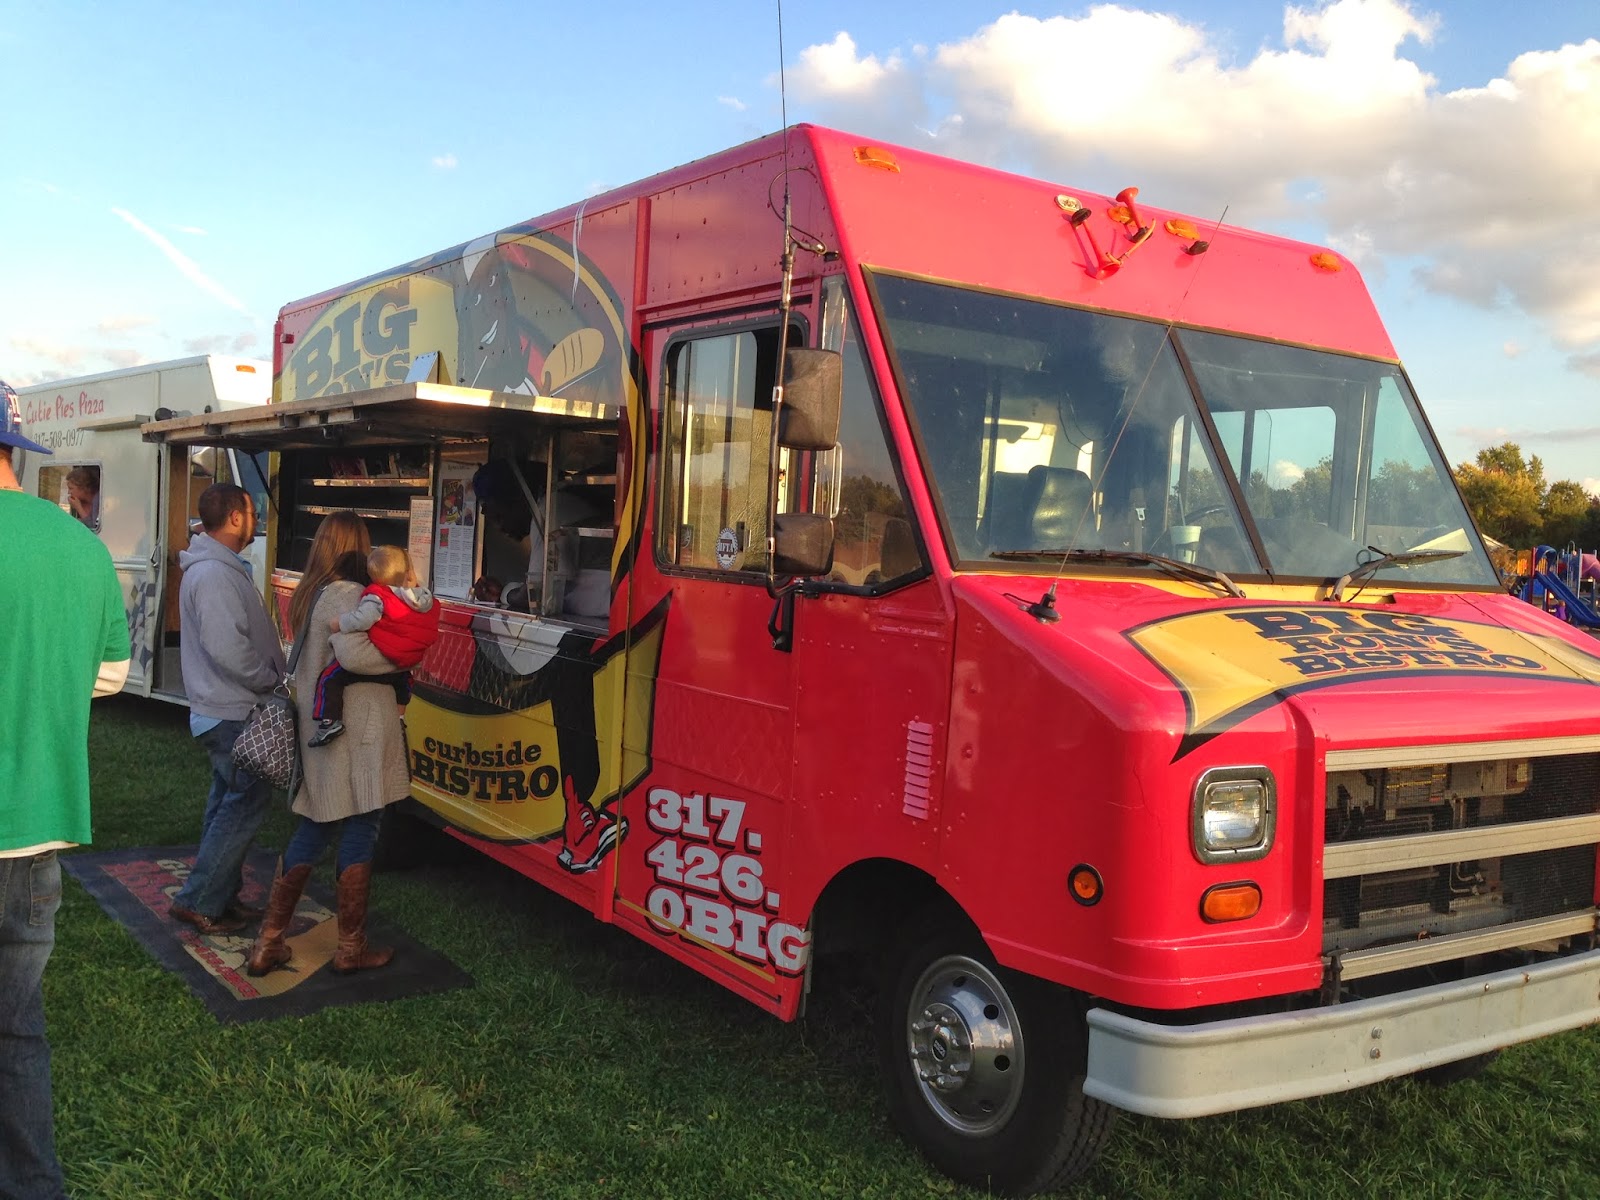 Indianapolis Restaurant Scene: Food Truck: Big Ron's Bistro